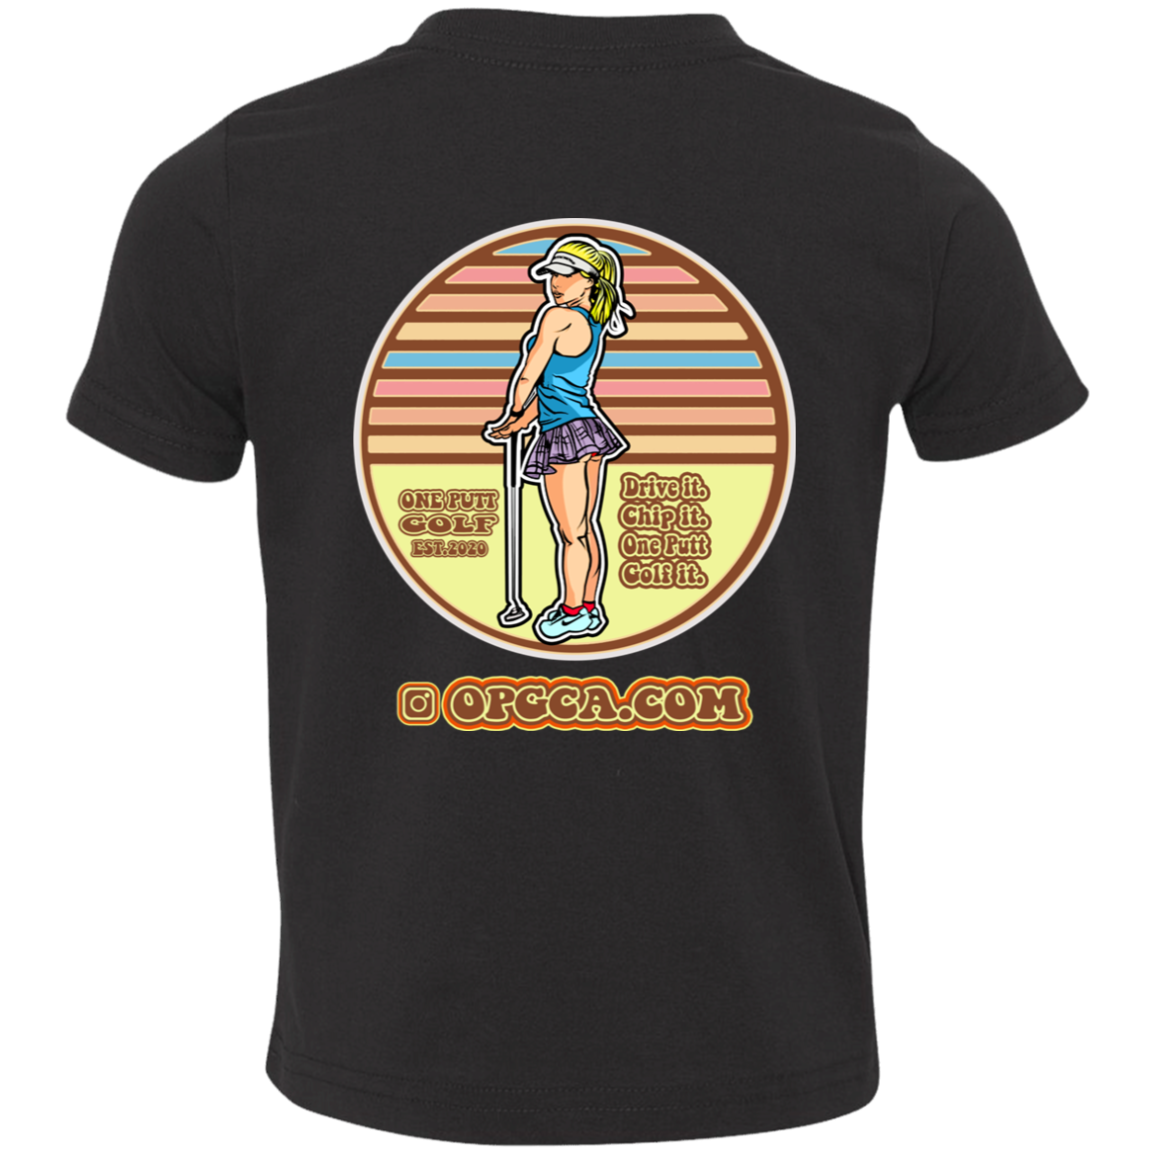 OPG Custom Design #28. Drive it. Chip it. One Putt golf it. Toddler Jersey T-Shirt